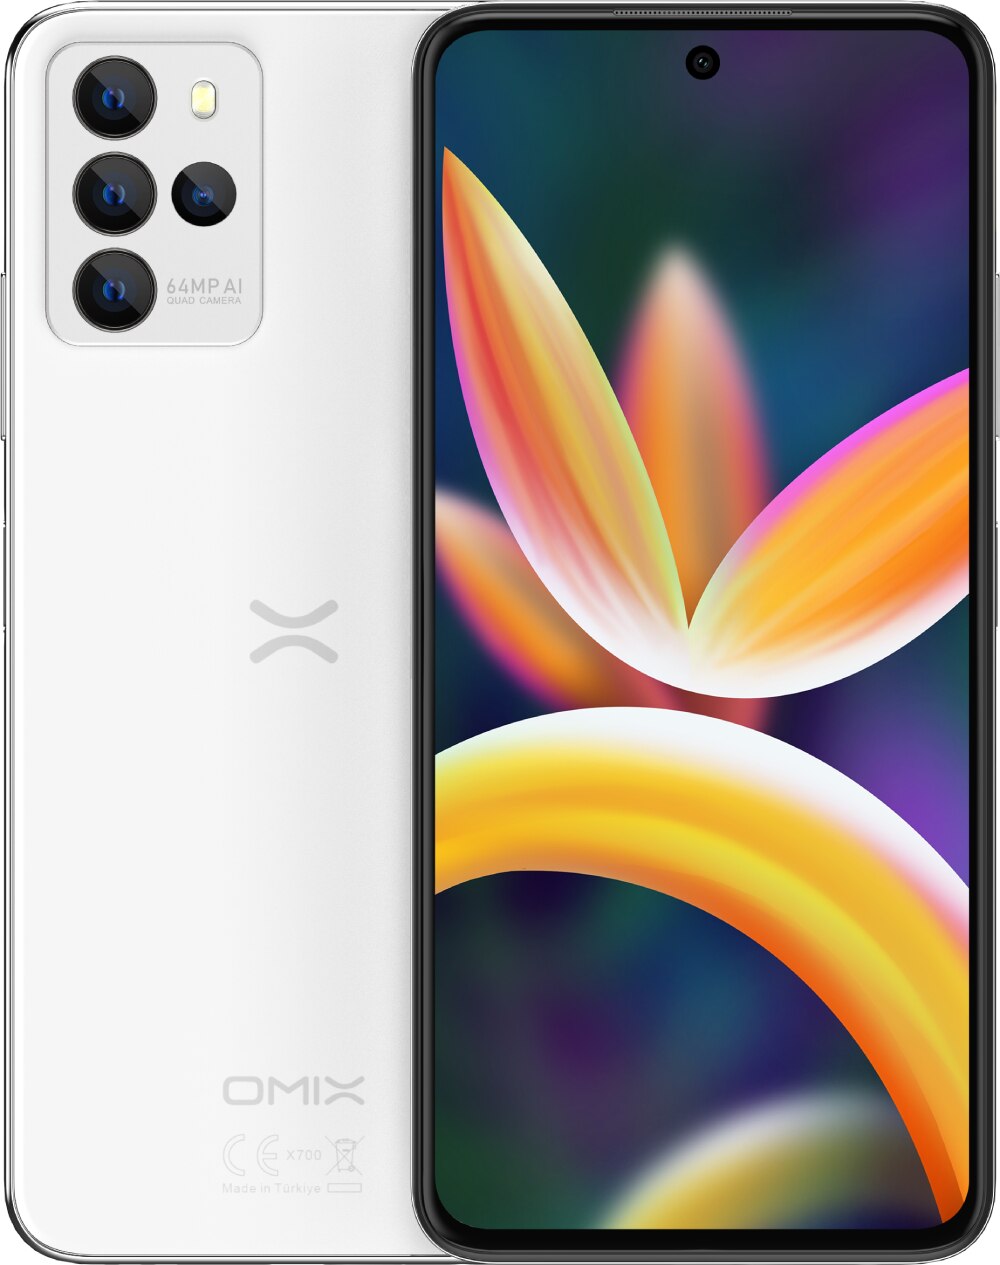 Omix X700 128 GB (Omix Türkiye Garantili)